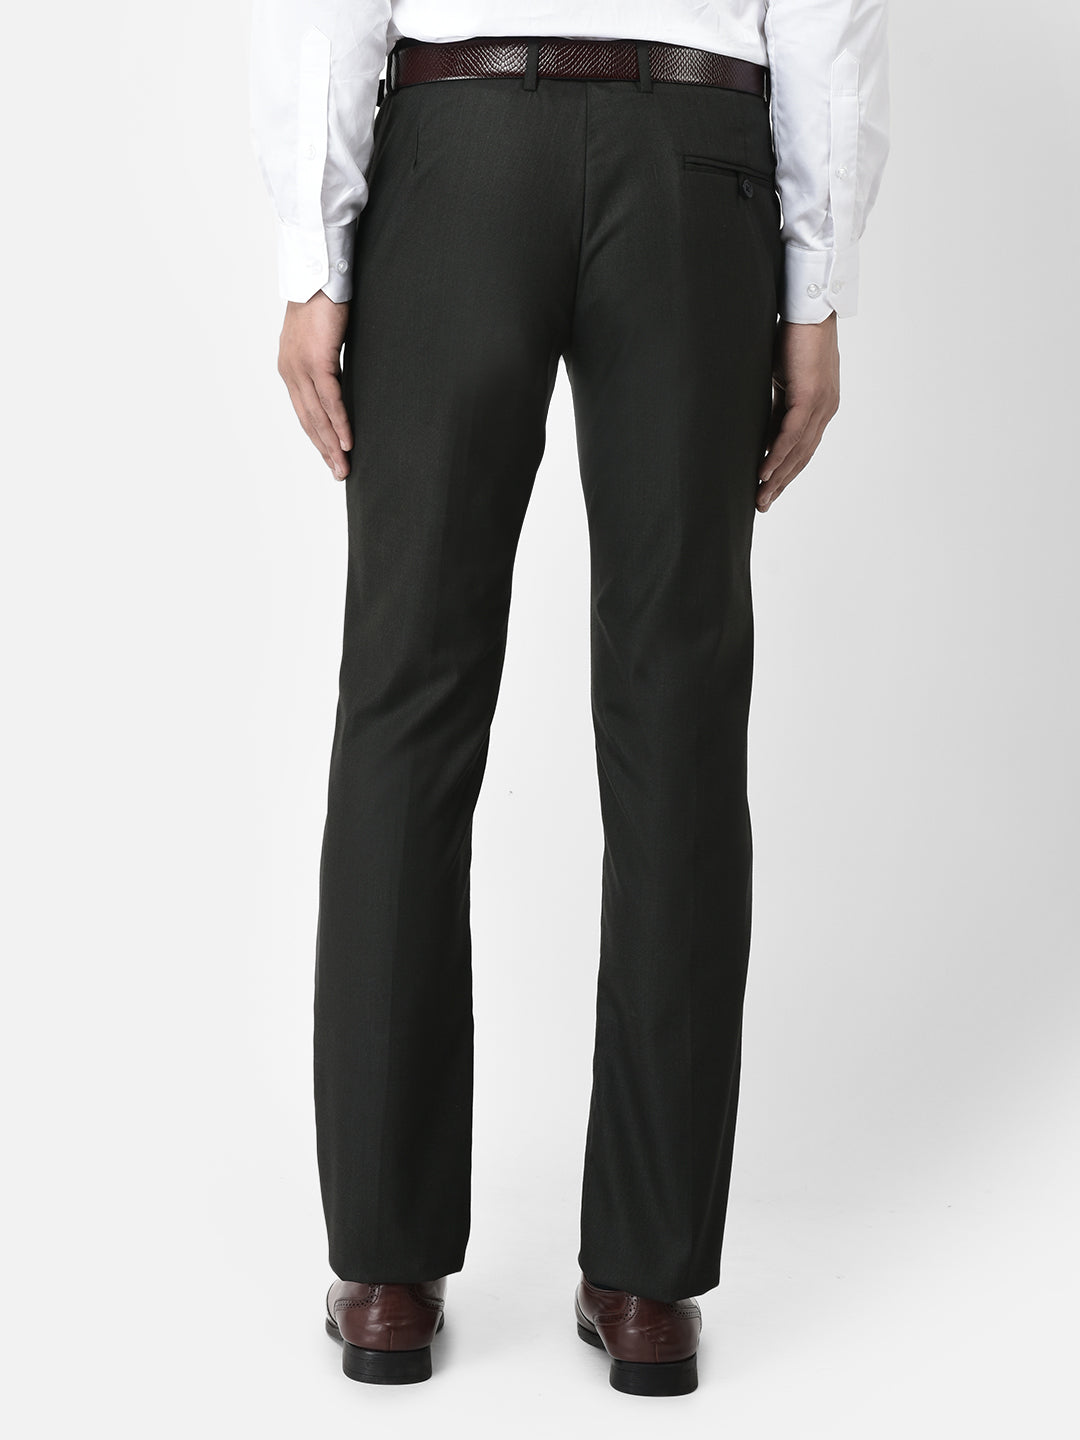 Cobb Black Ultra Fit Formal Trouser